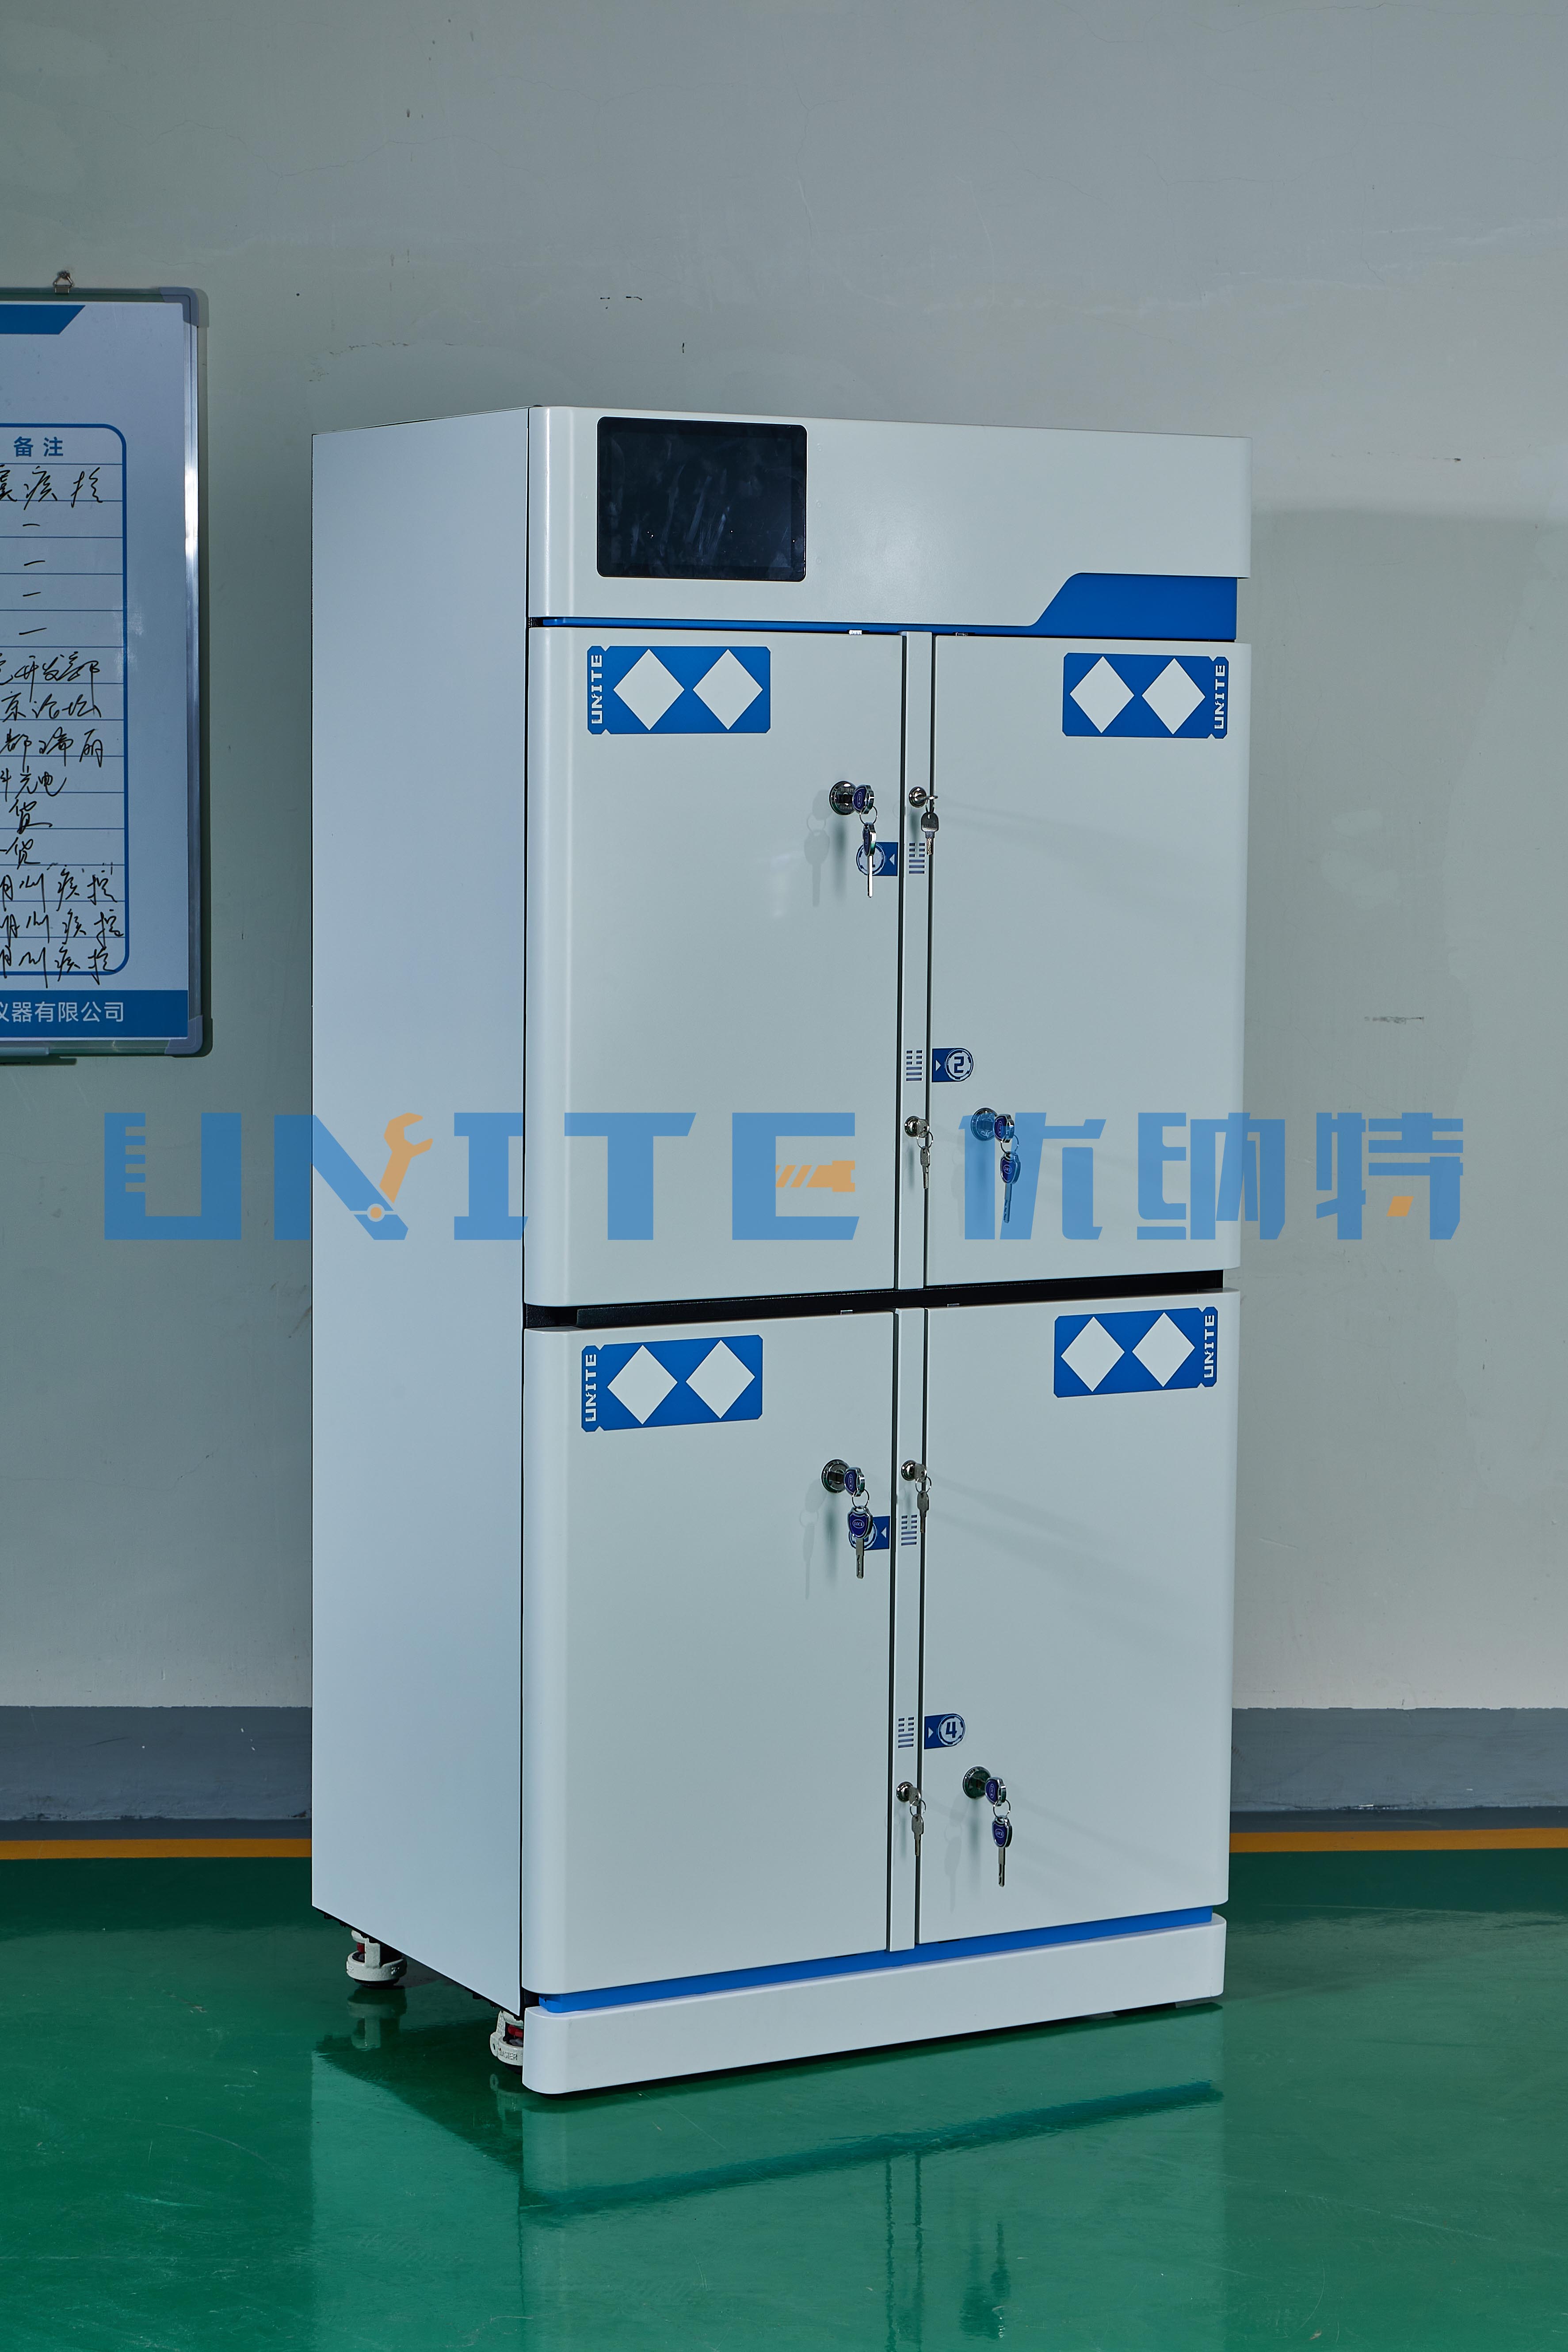 Unite Usample R4.2 Four-zone Matrix IOT Cabinets for Hazardous Chemicals for storage of reagents, hazardous chemicals